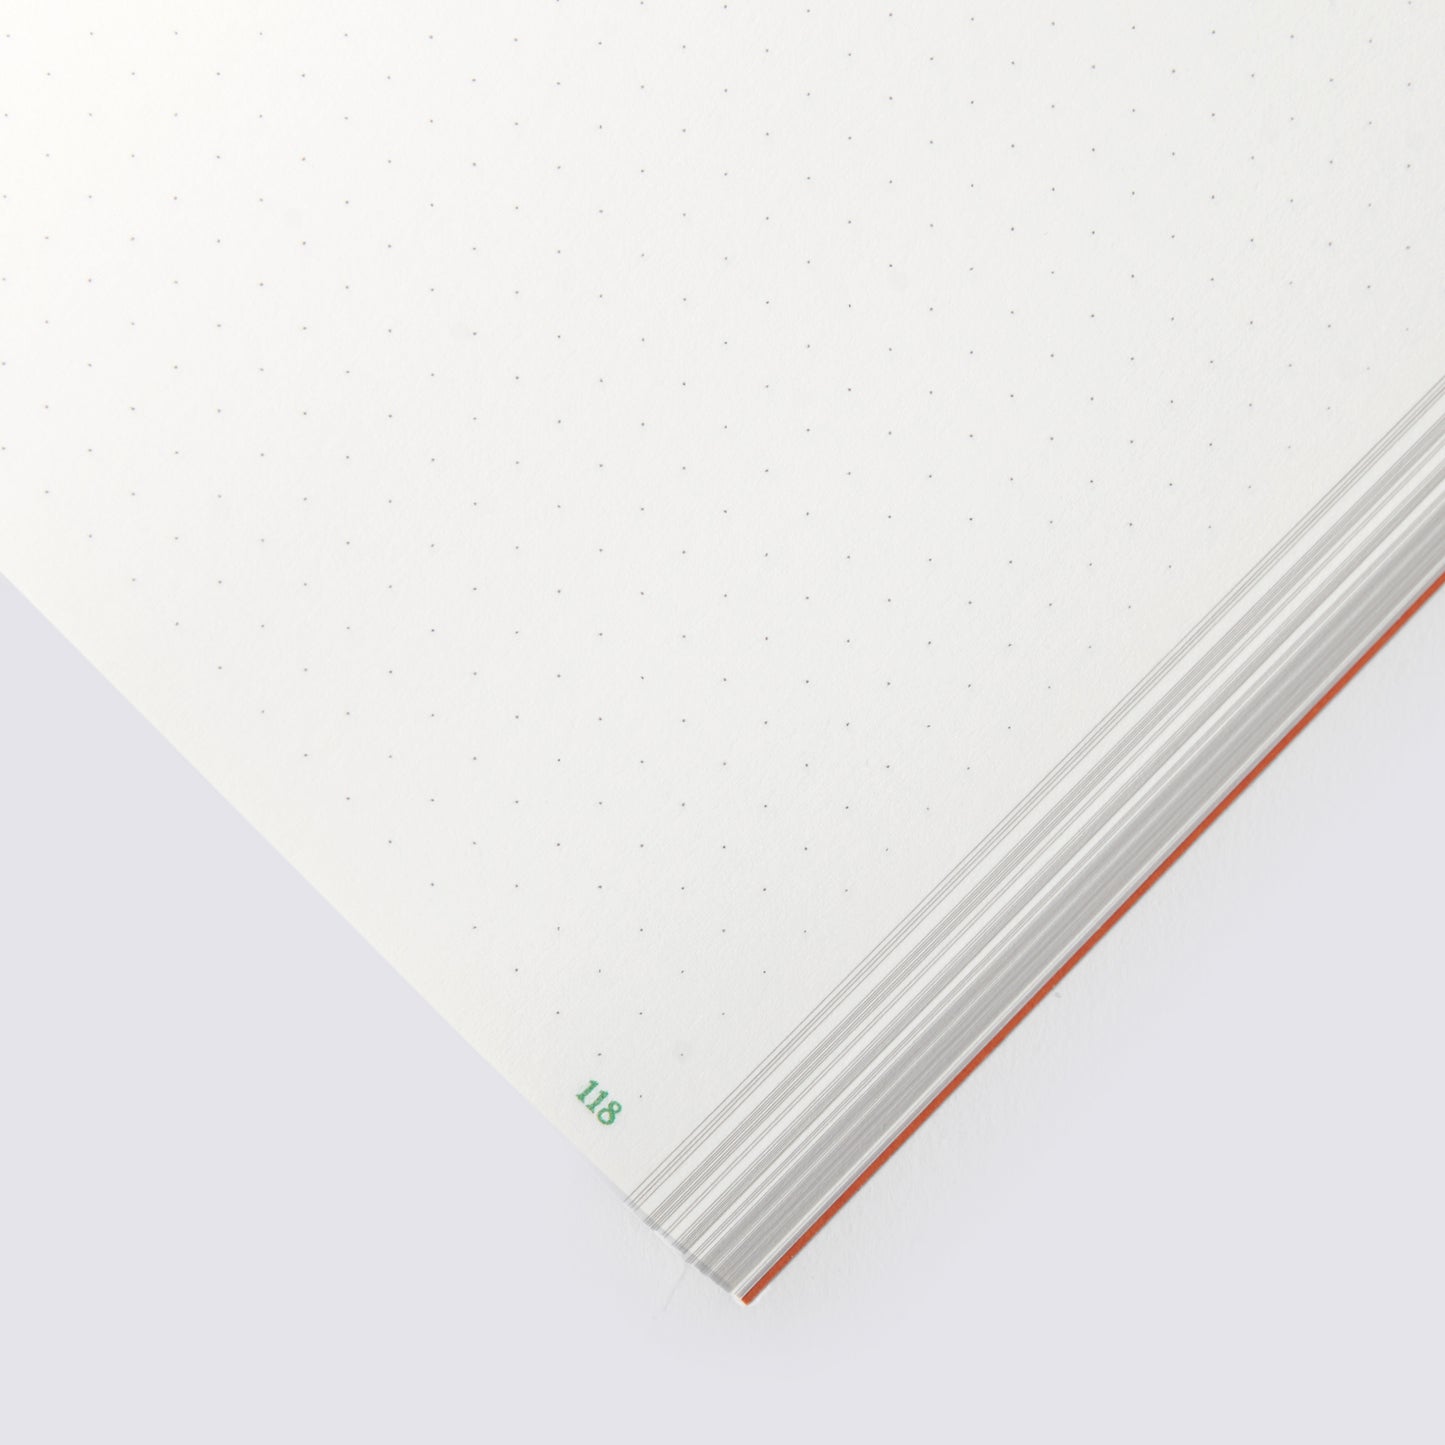 Morello Notebook and Pen Duo - Primo Gel Pen / Dot Grid Paper